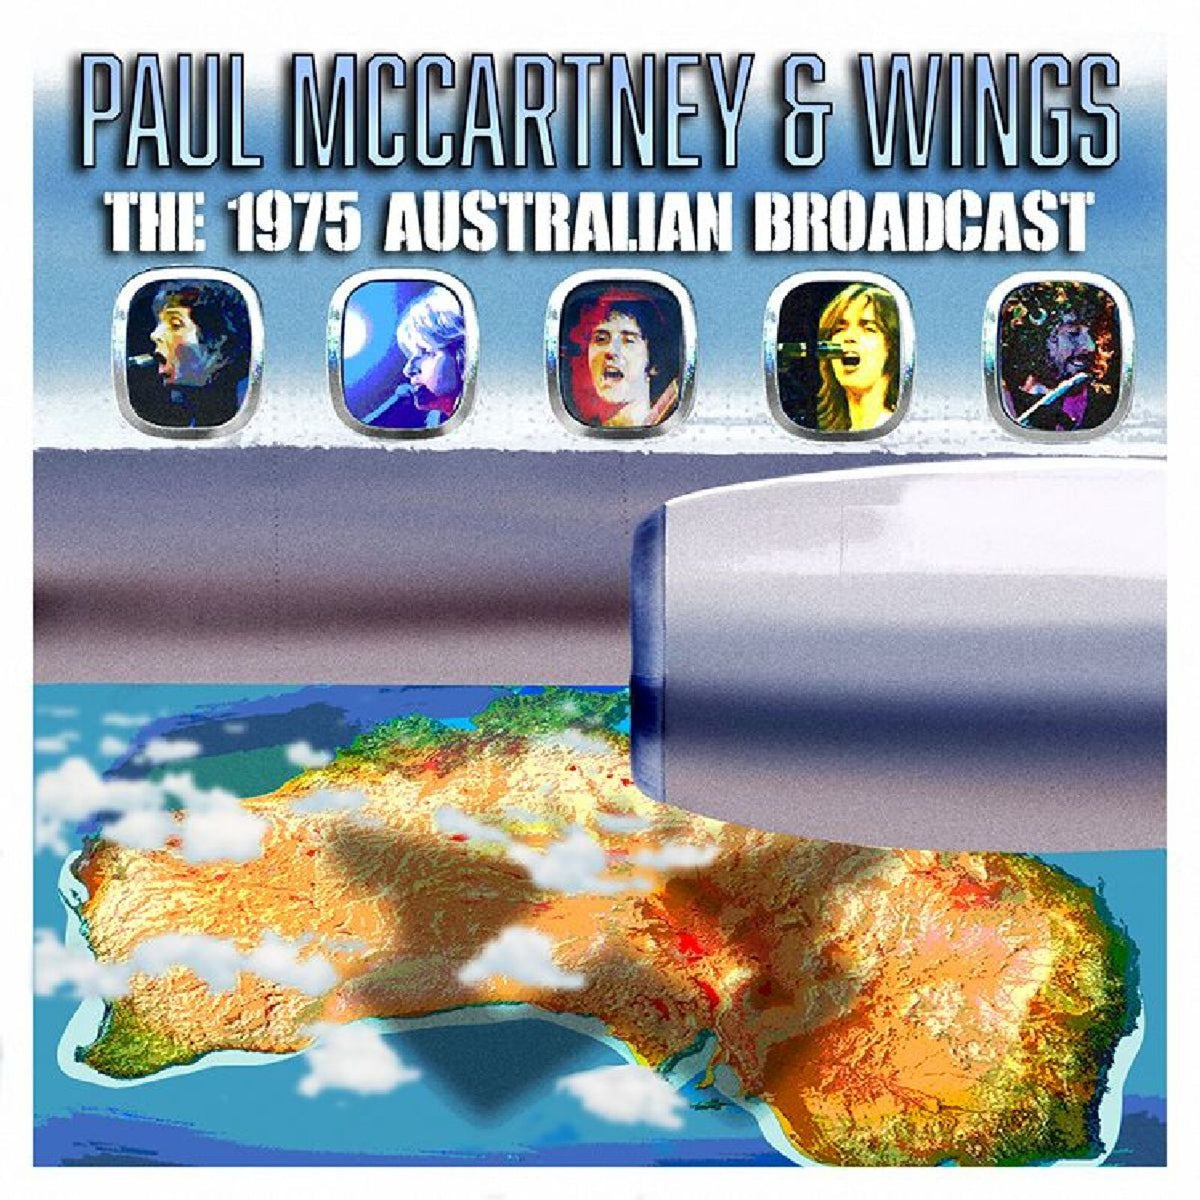 Paul McCartney and Wings - The 1975 Australian Broadcast - FMGZ172CD